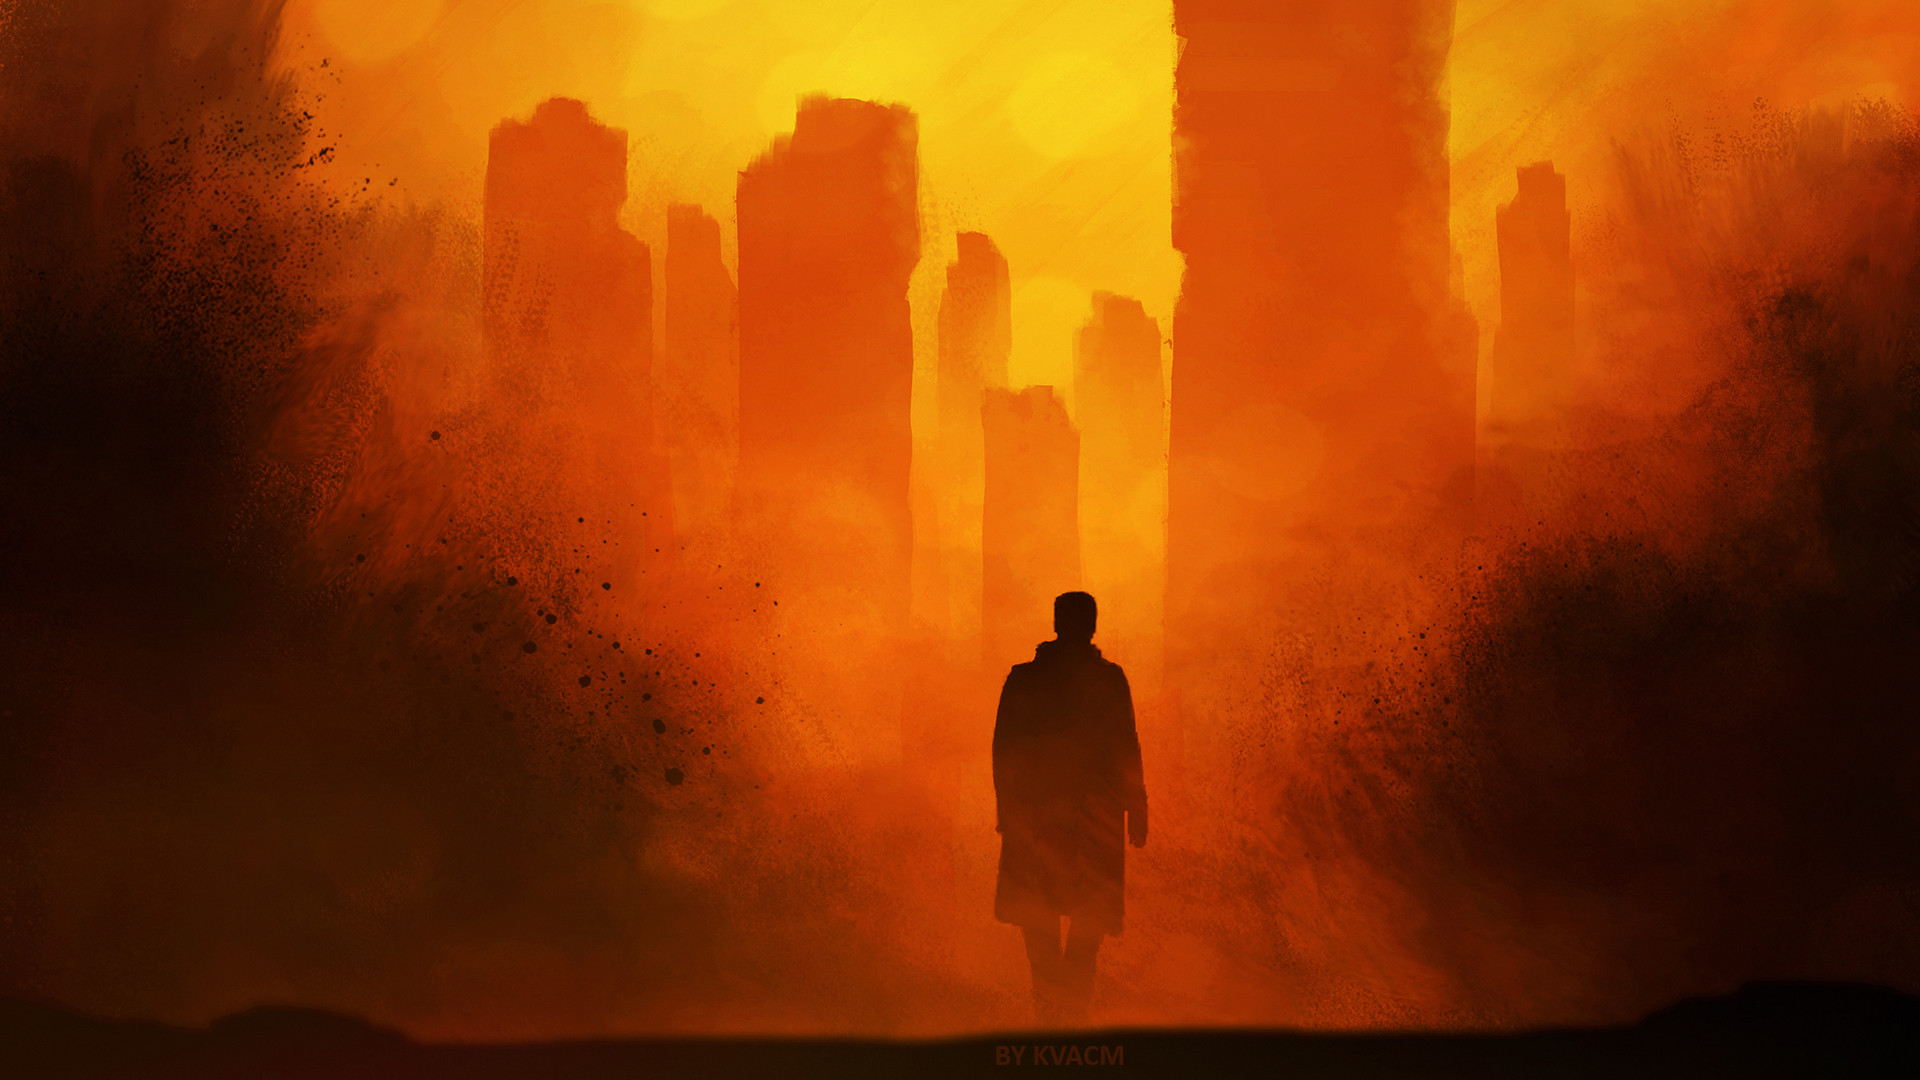 blade runner 2049, silhouette, movie, building, city, orange (color)